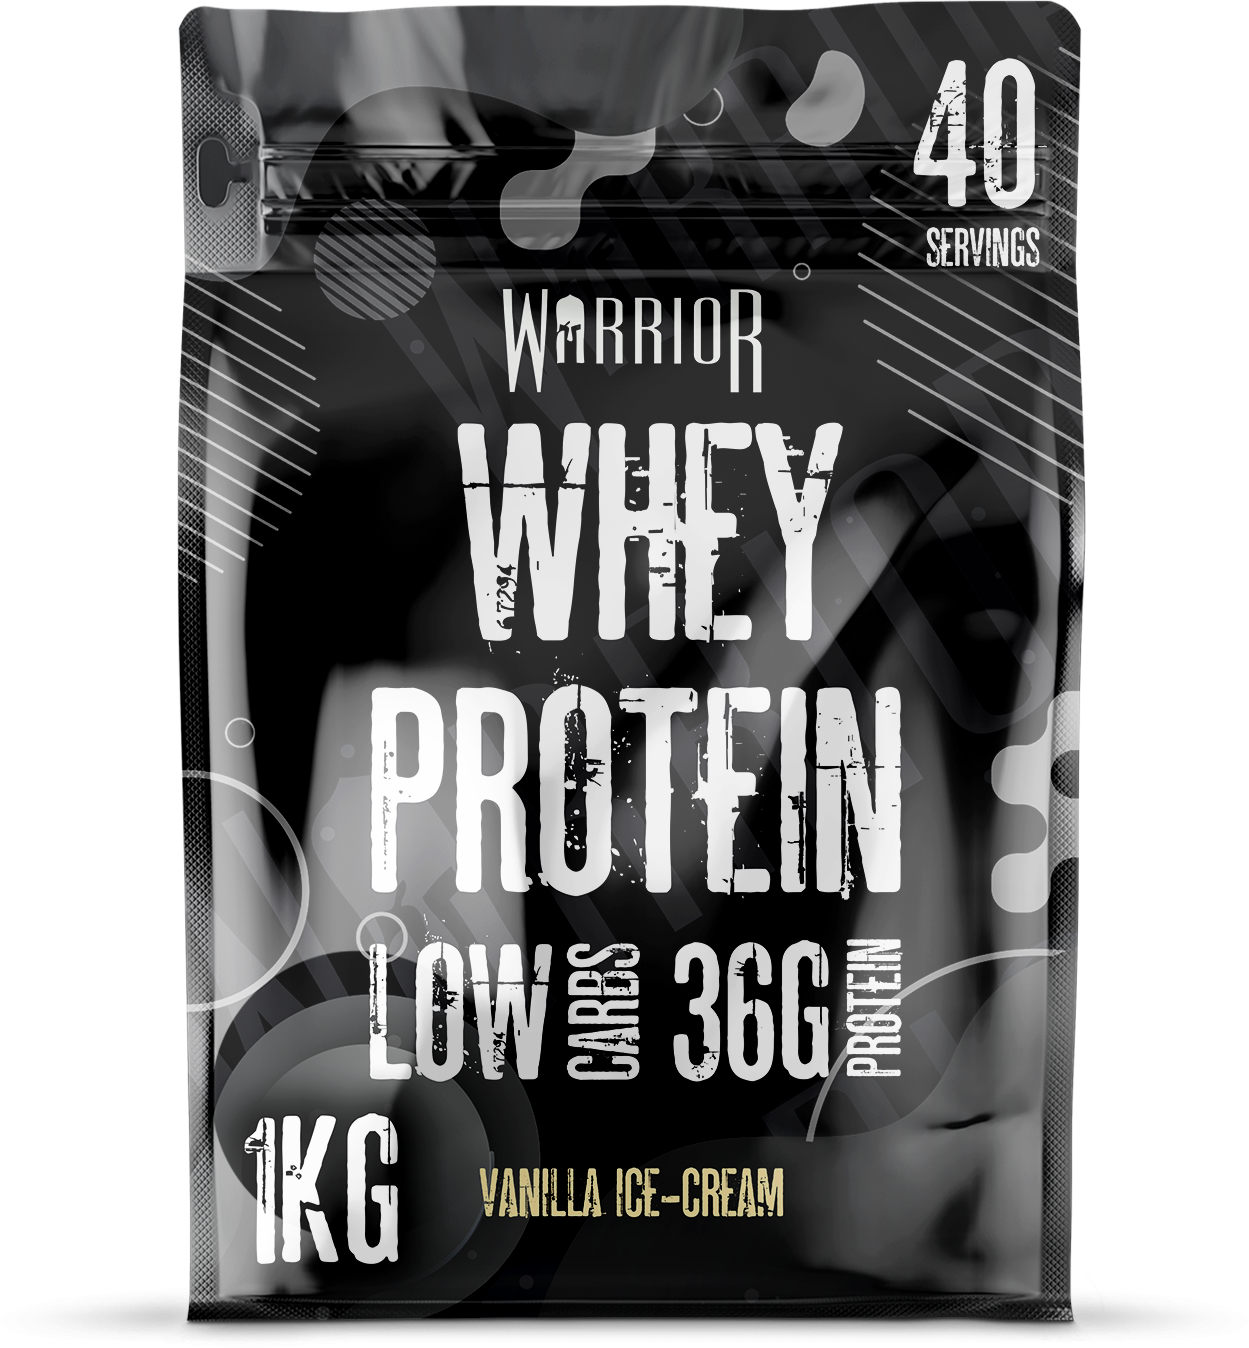 Warrior Whey Protein Powder 1kg - Low Sugar, Low Carbs